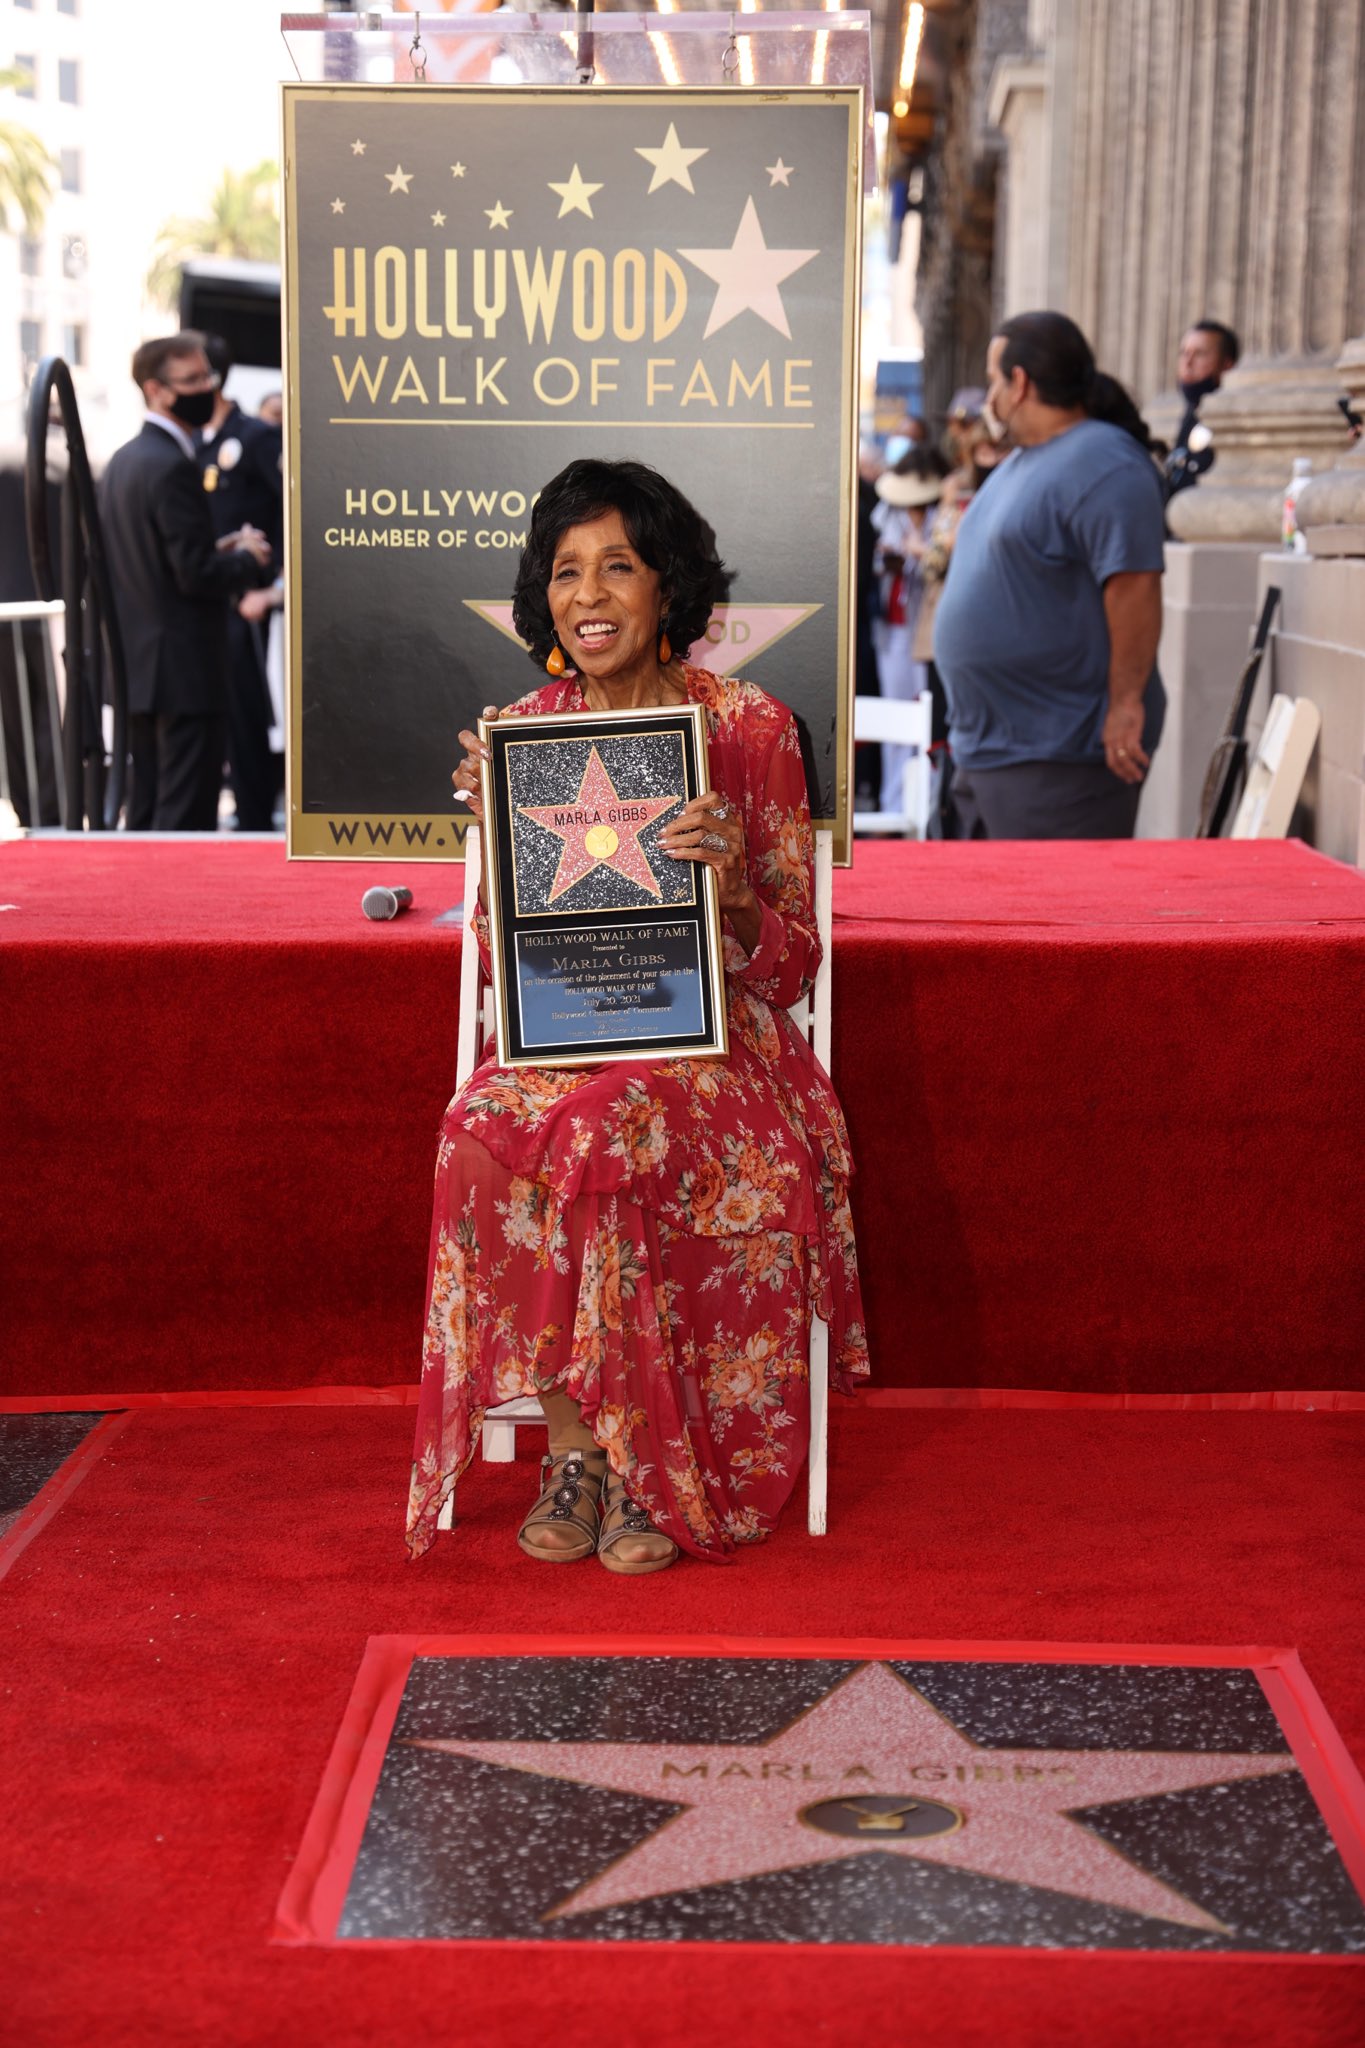 Happy Birthday to Walk of Famer Marla Gibbs!  